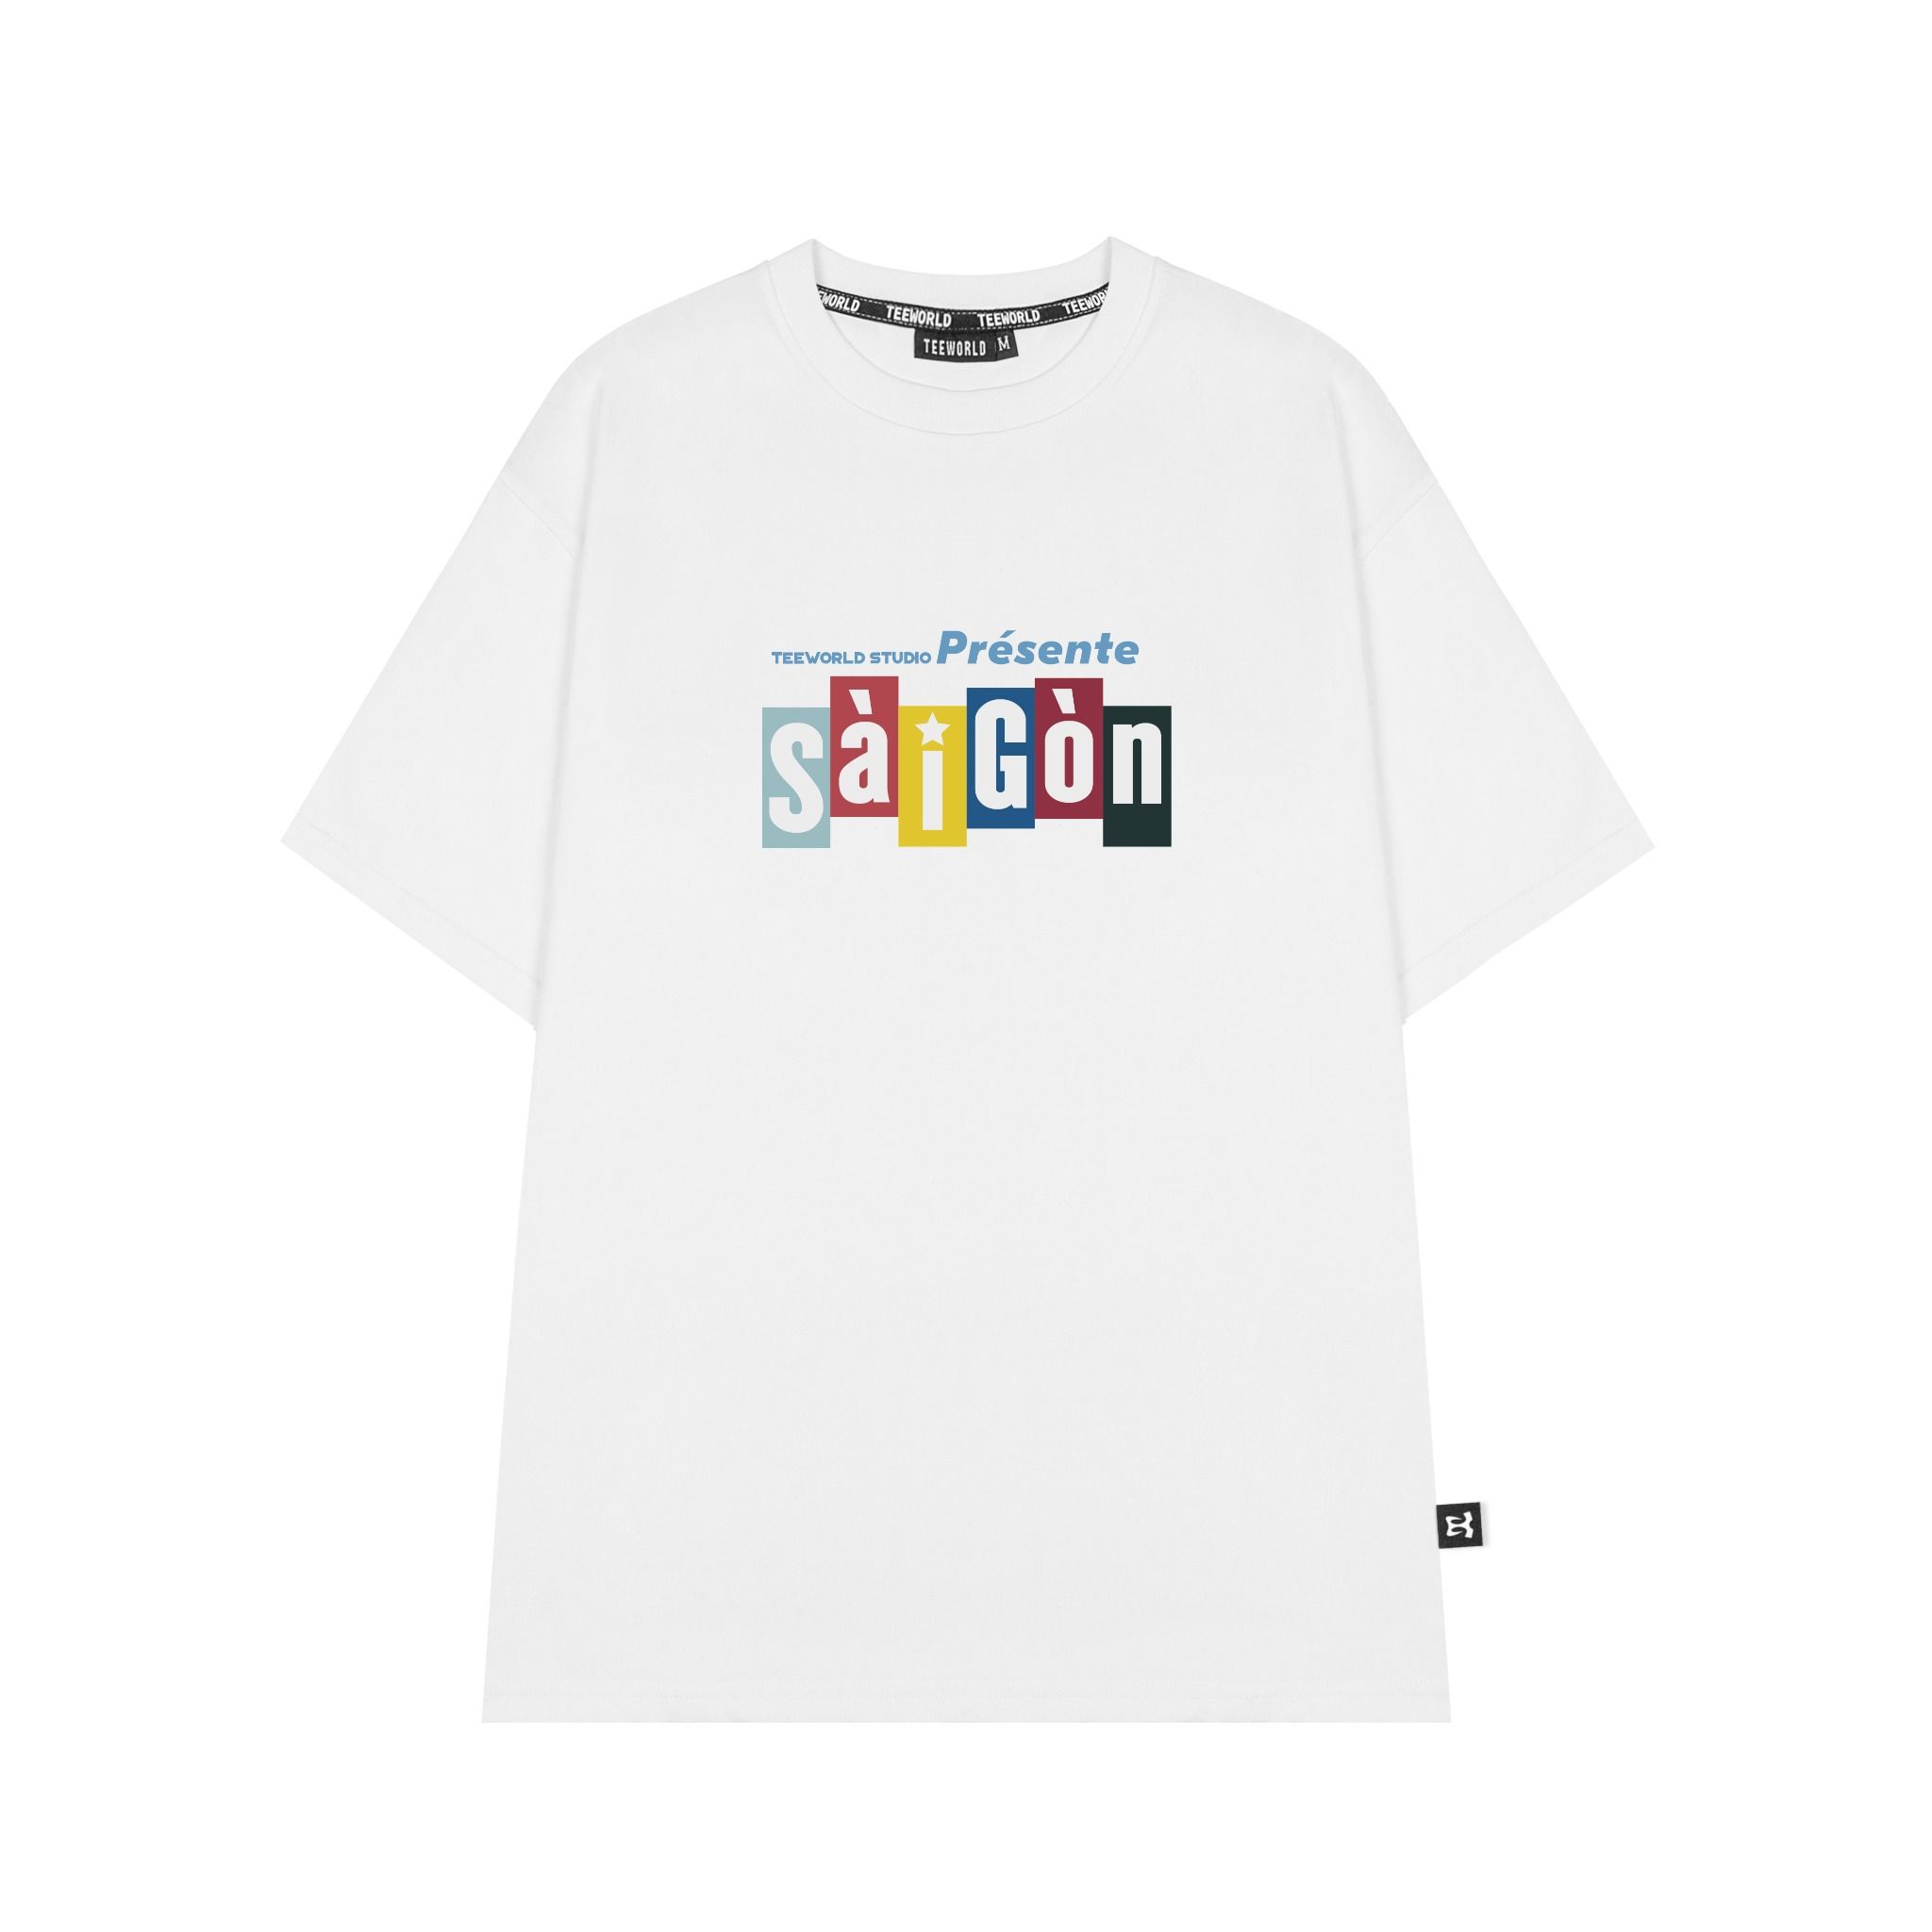  Áo Teeworld Saigon Présente T-shirt 